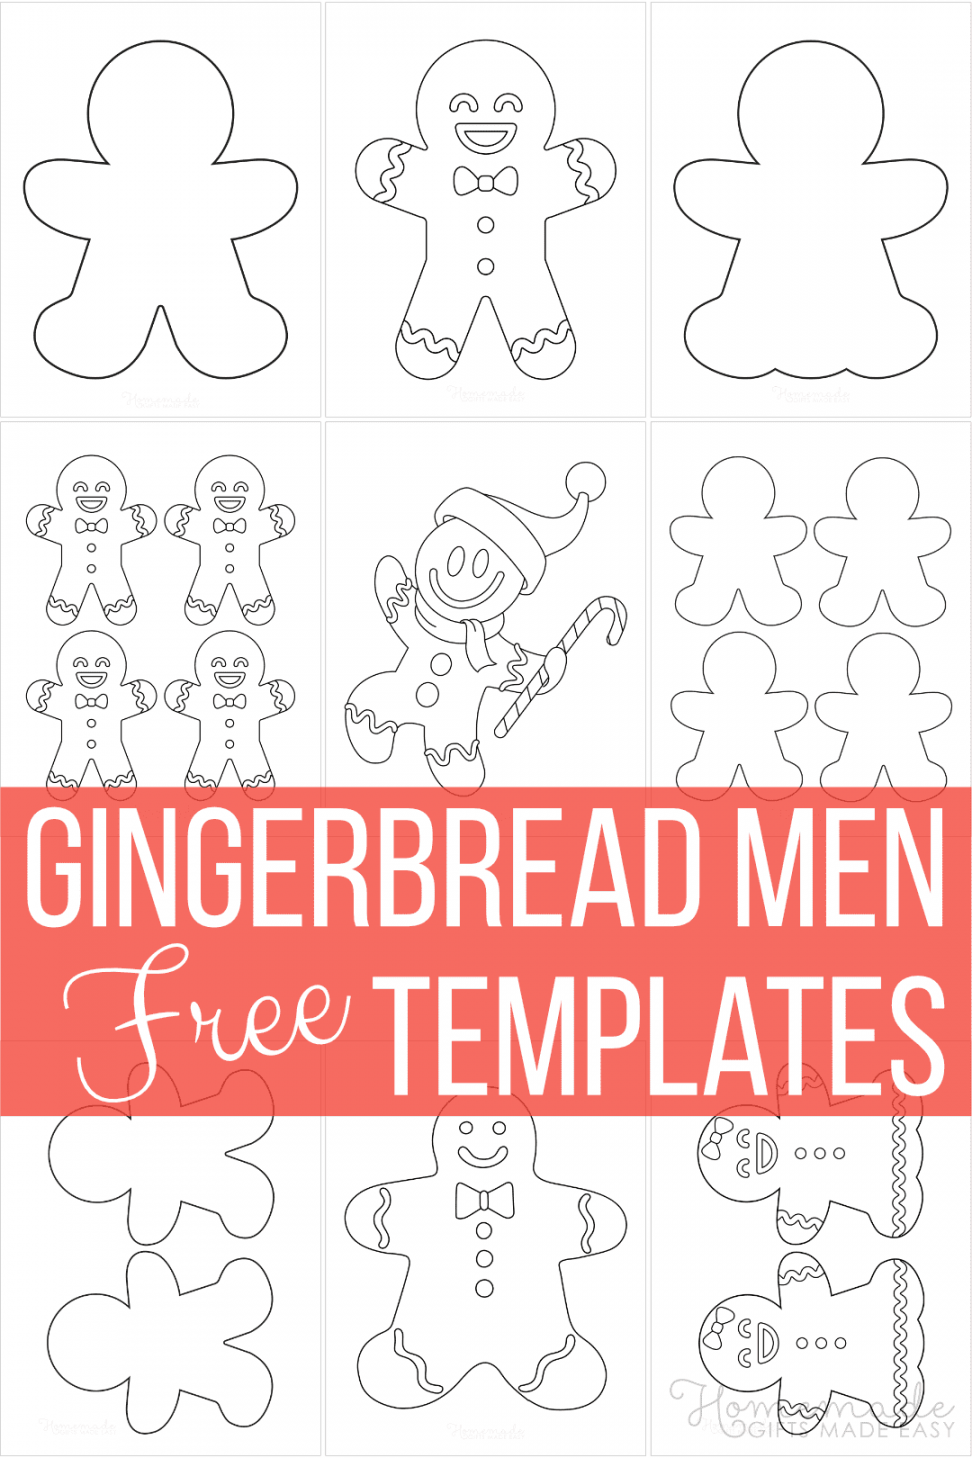 Free Printable Gingerbread Man Templates & Coloring Pages - FREE Printables - Gingerbread Printables